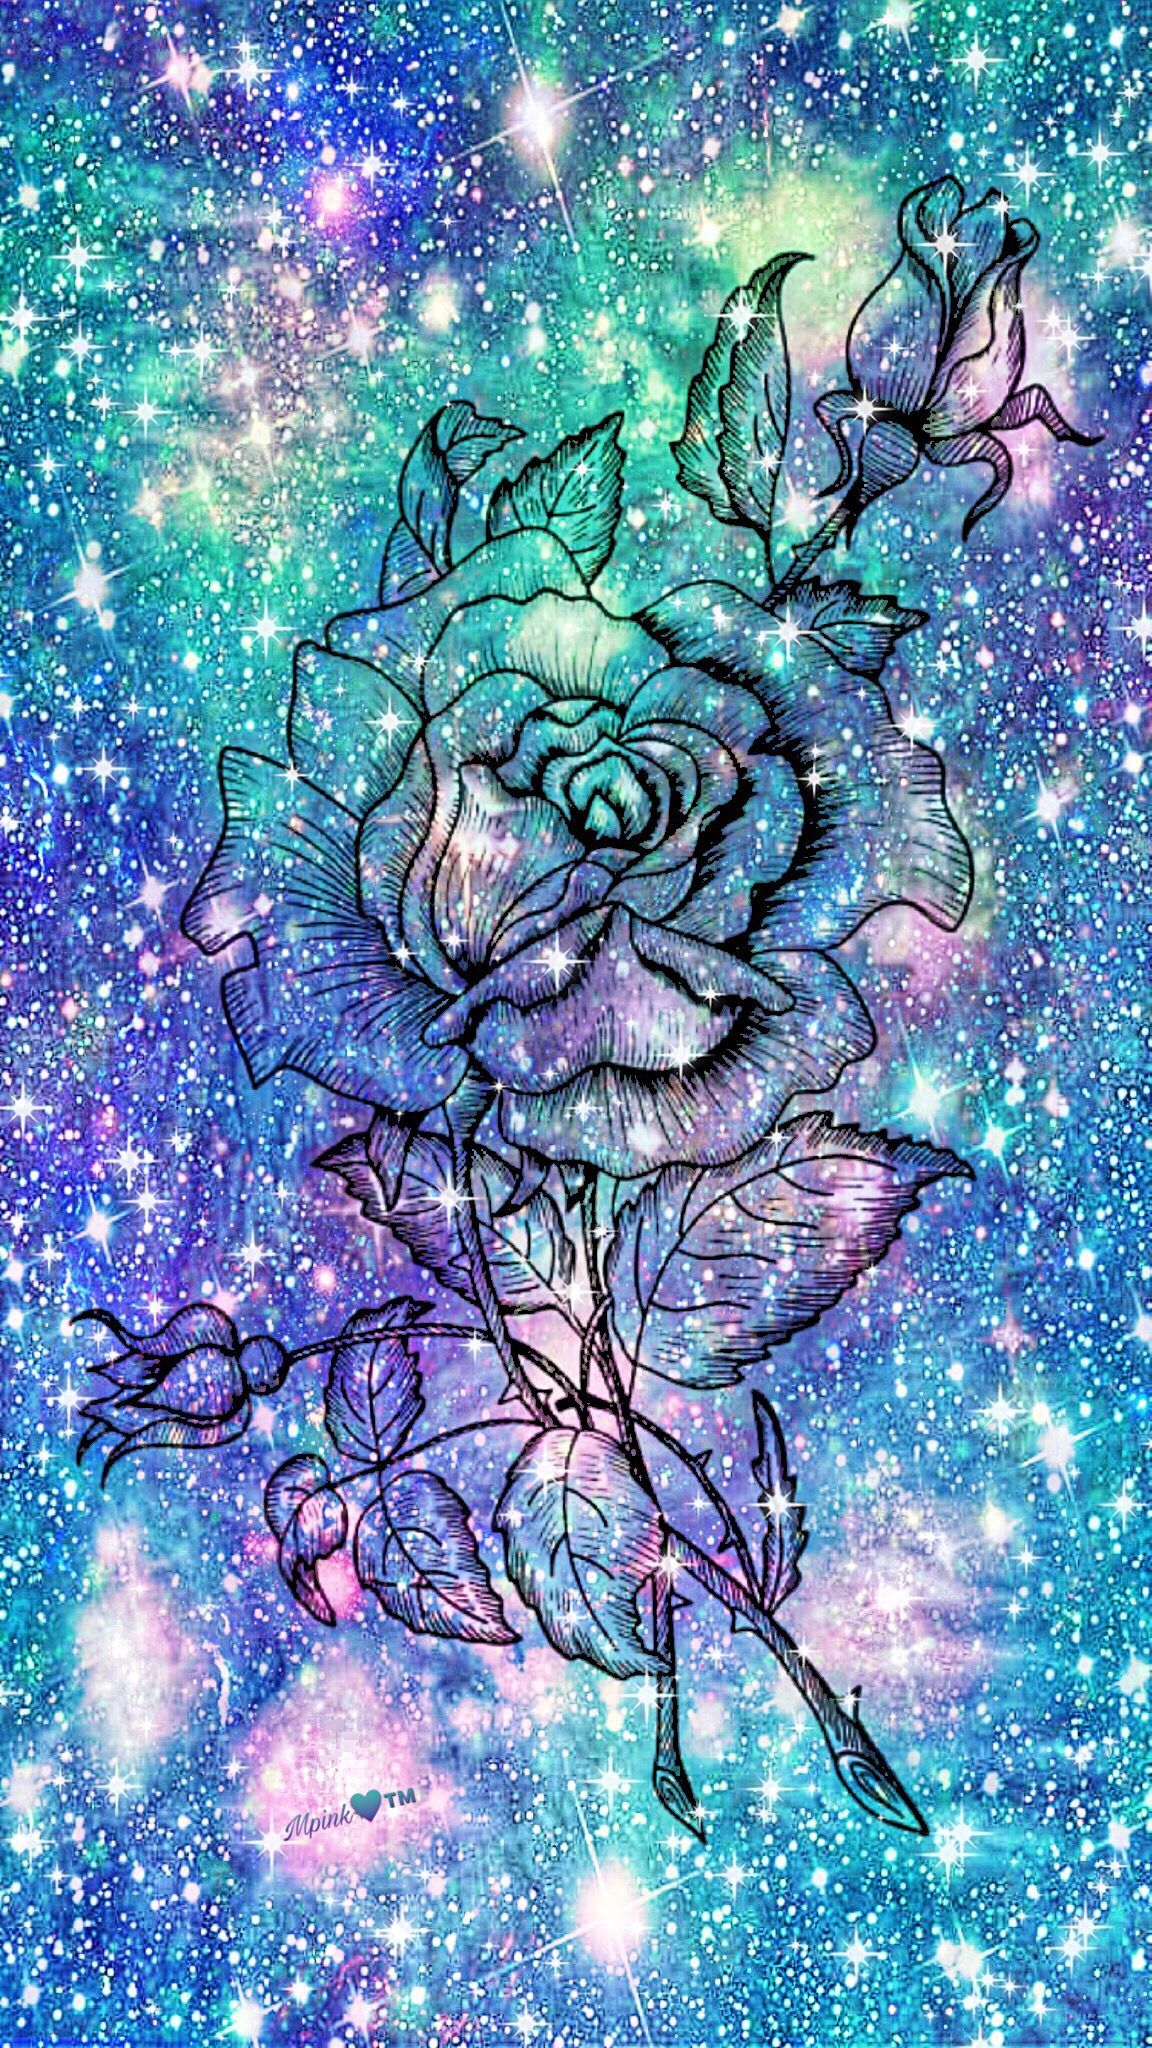 Marble Heart Galaxy Wallpaper androidwallpaper iphonewallpaper glitter  sparkle galaxy marble heart love pin  Sfondi iphone Sfondi carini  Sfondi twitter